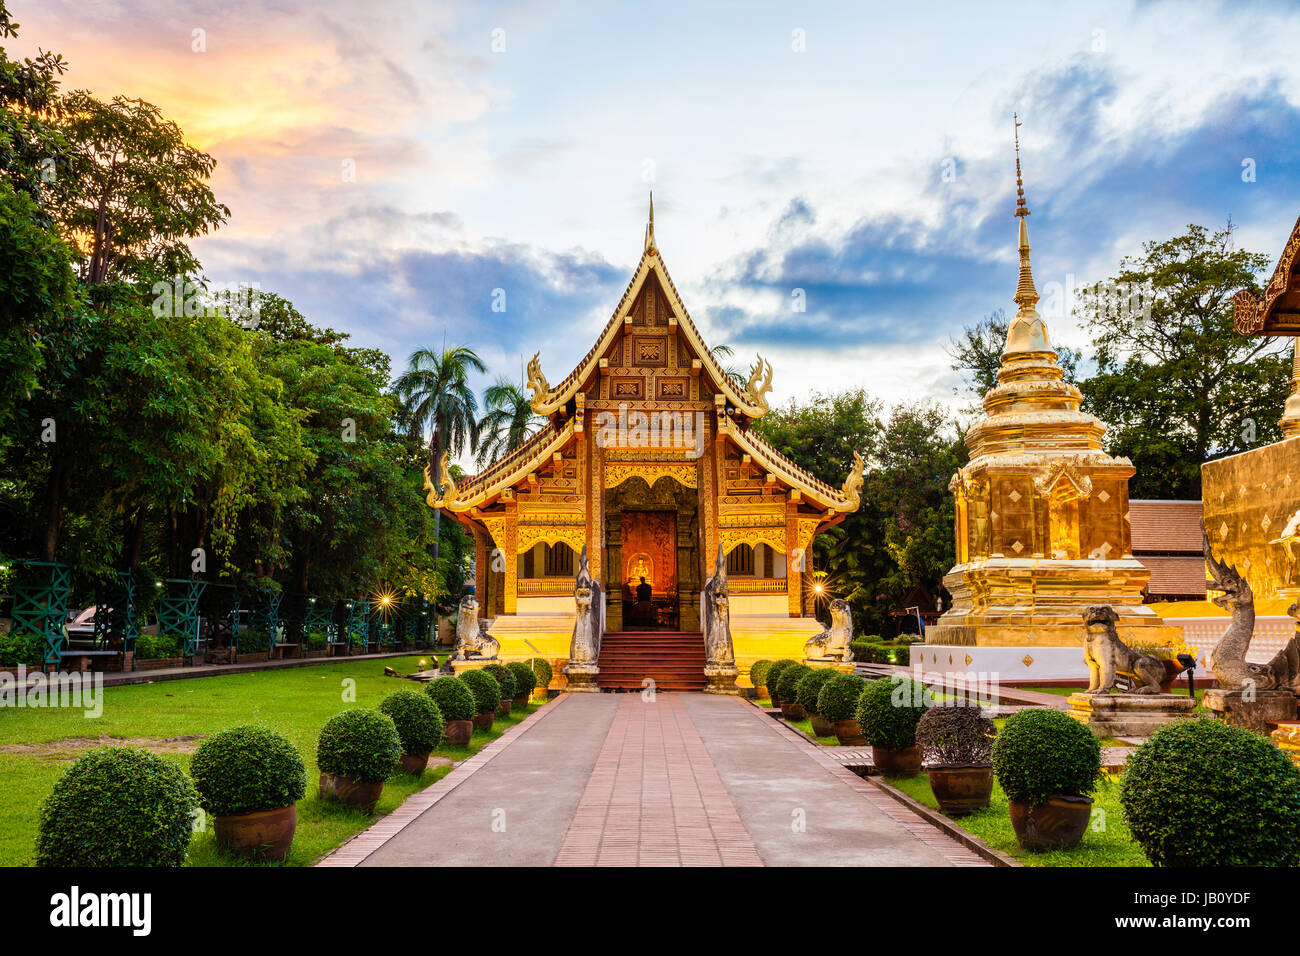 Wat Phra Singh Woramahaviharn. Buddhist temple in Chiang Mai, Thailand. Stock Photo